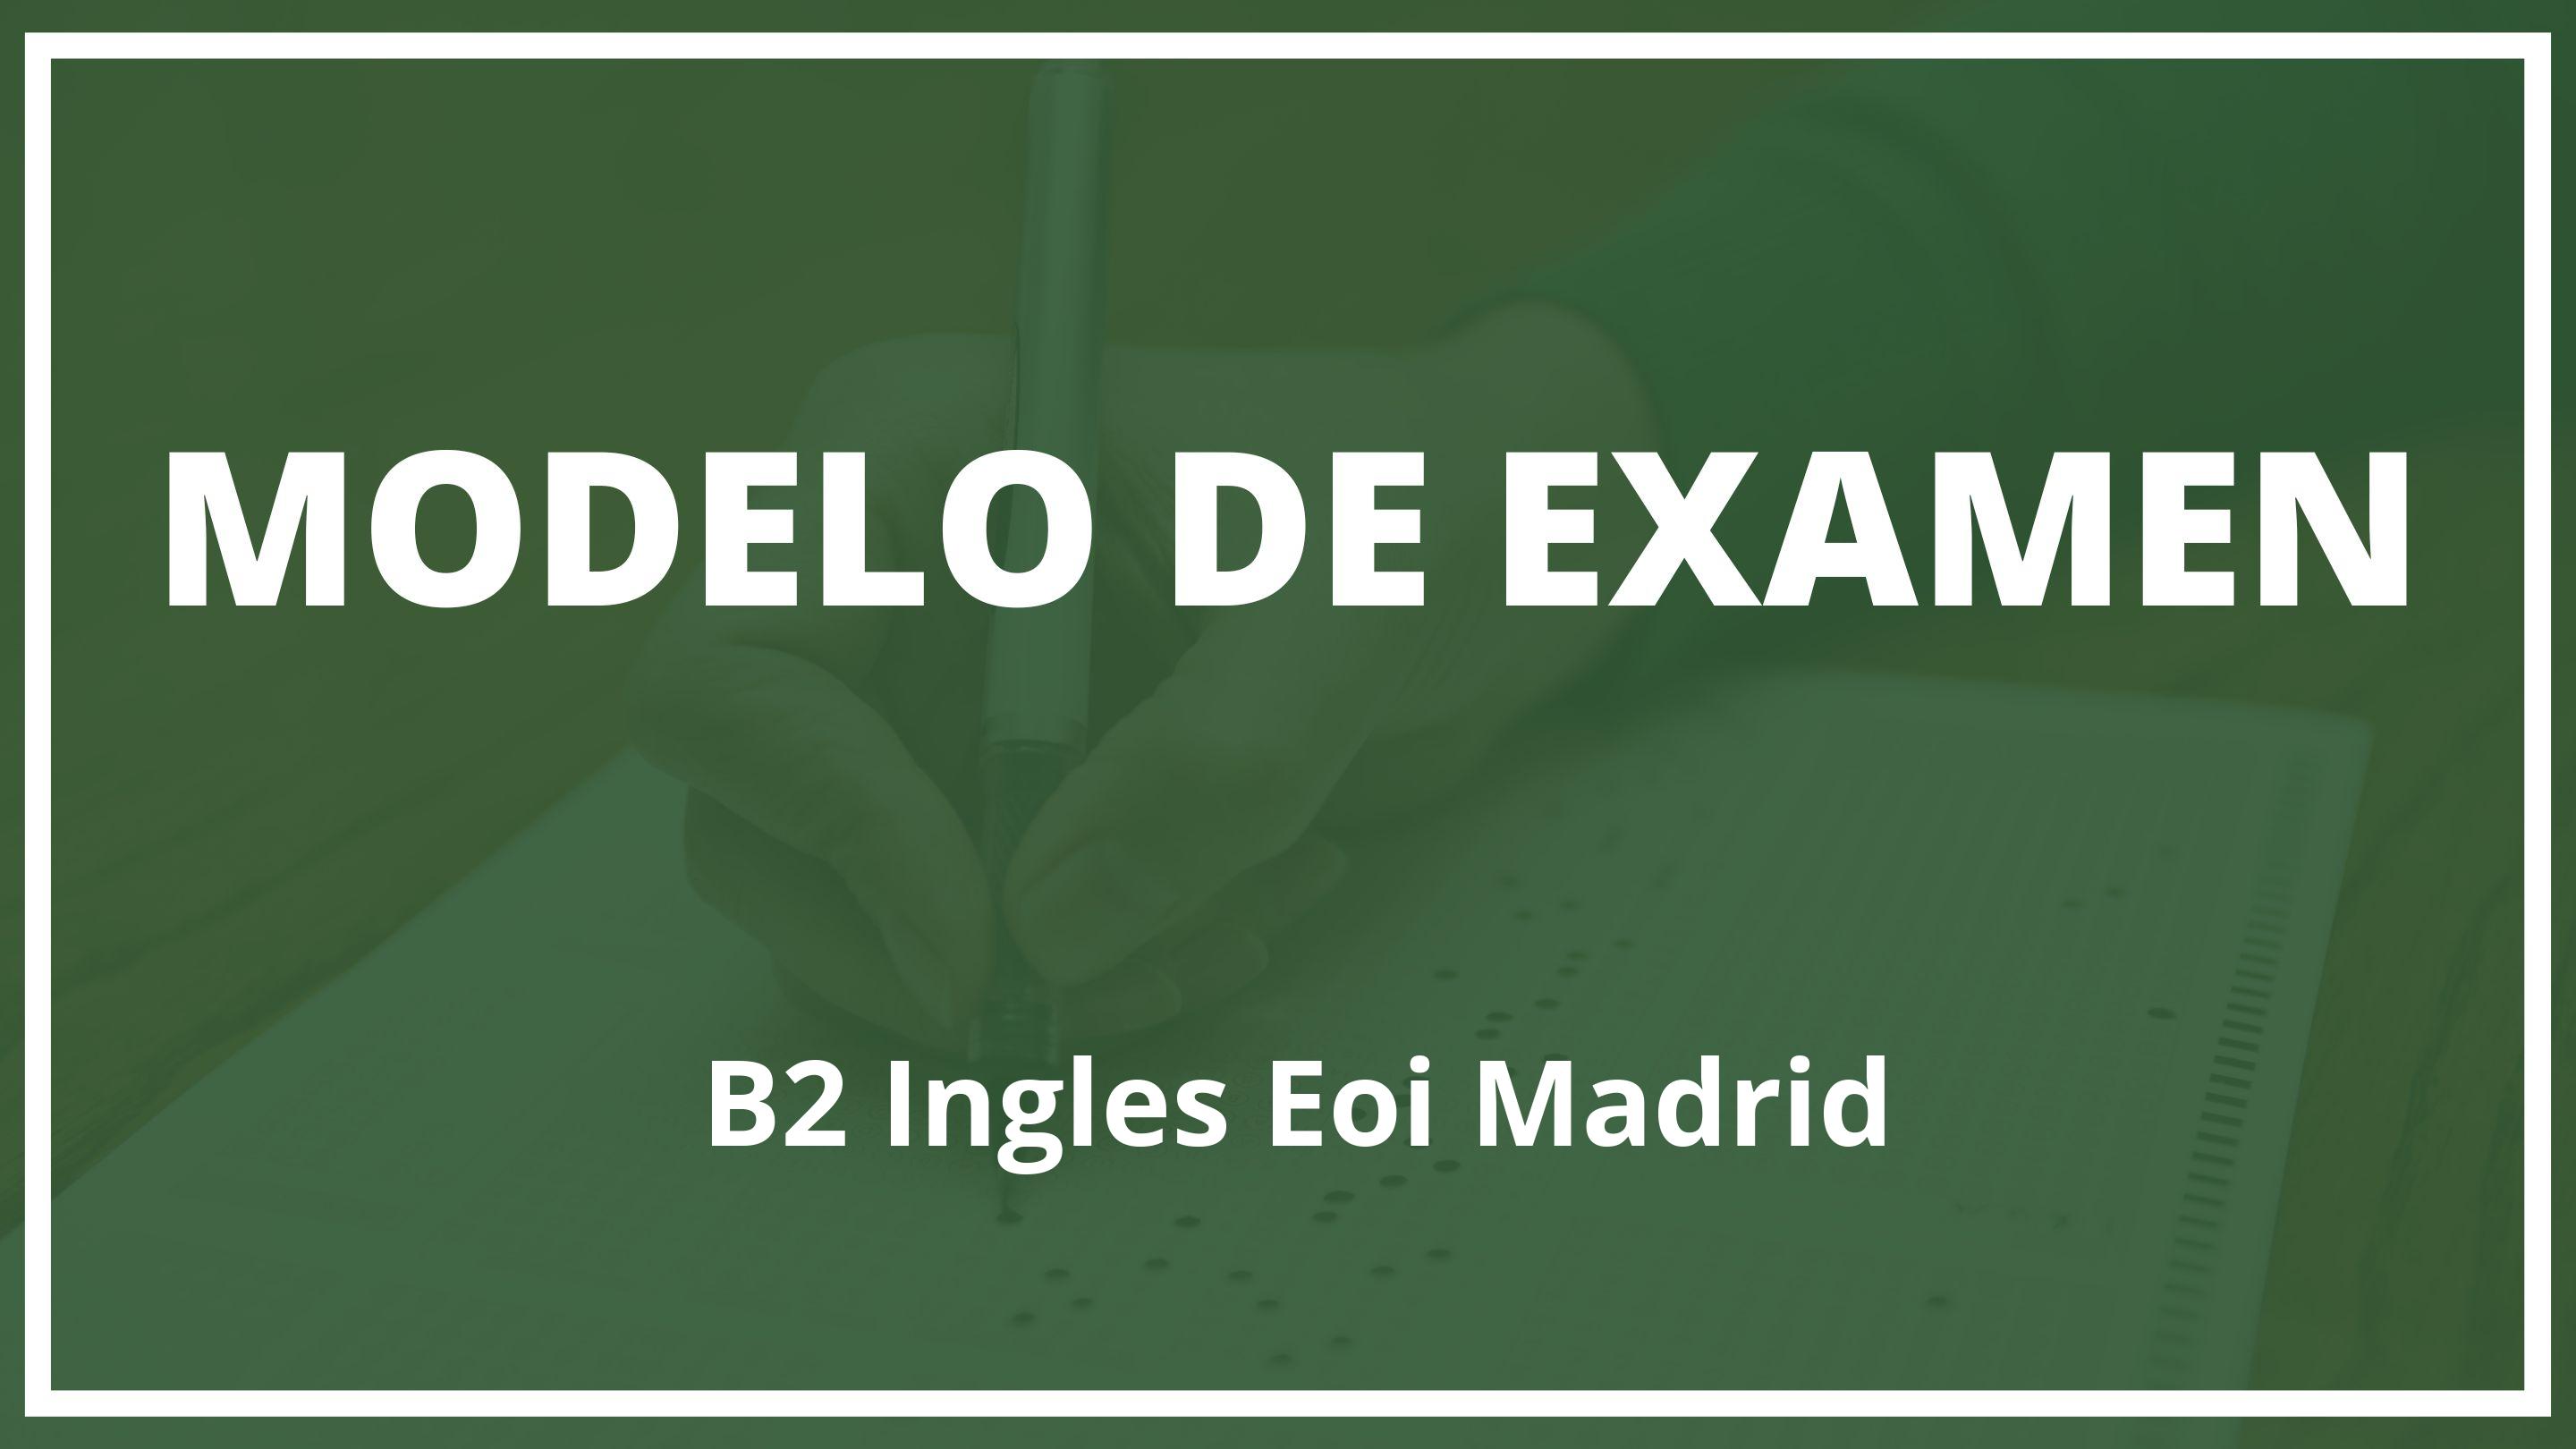 Examen B2 Ingles Eoi Madrid